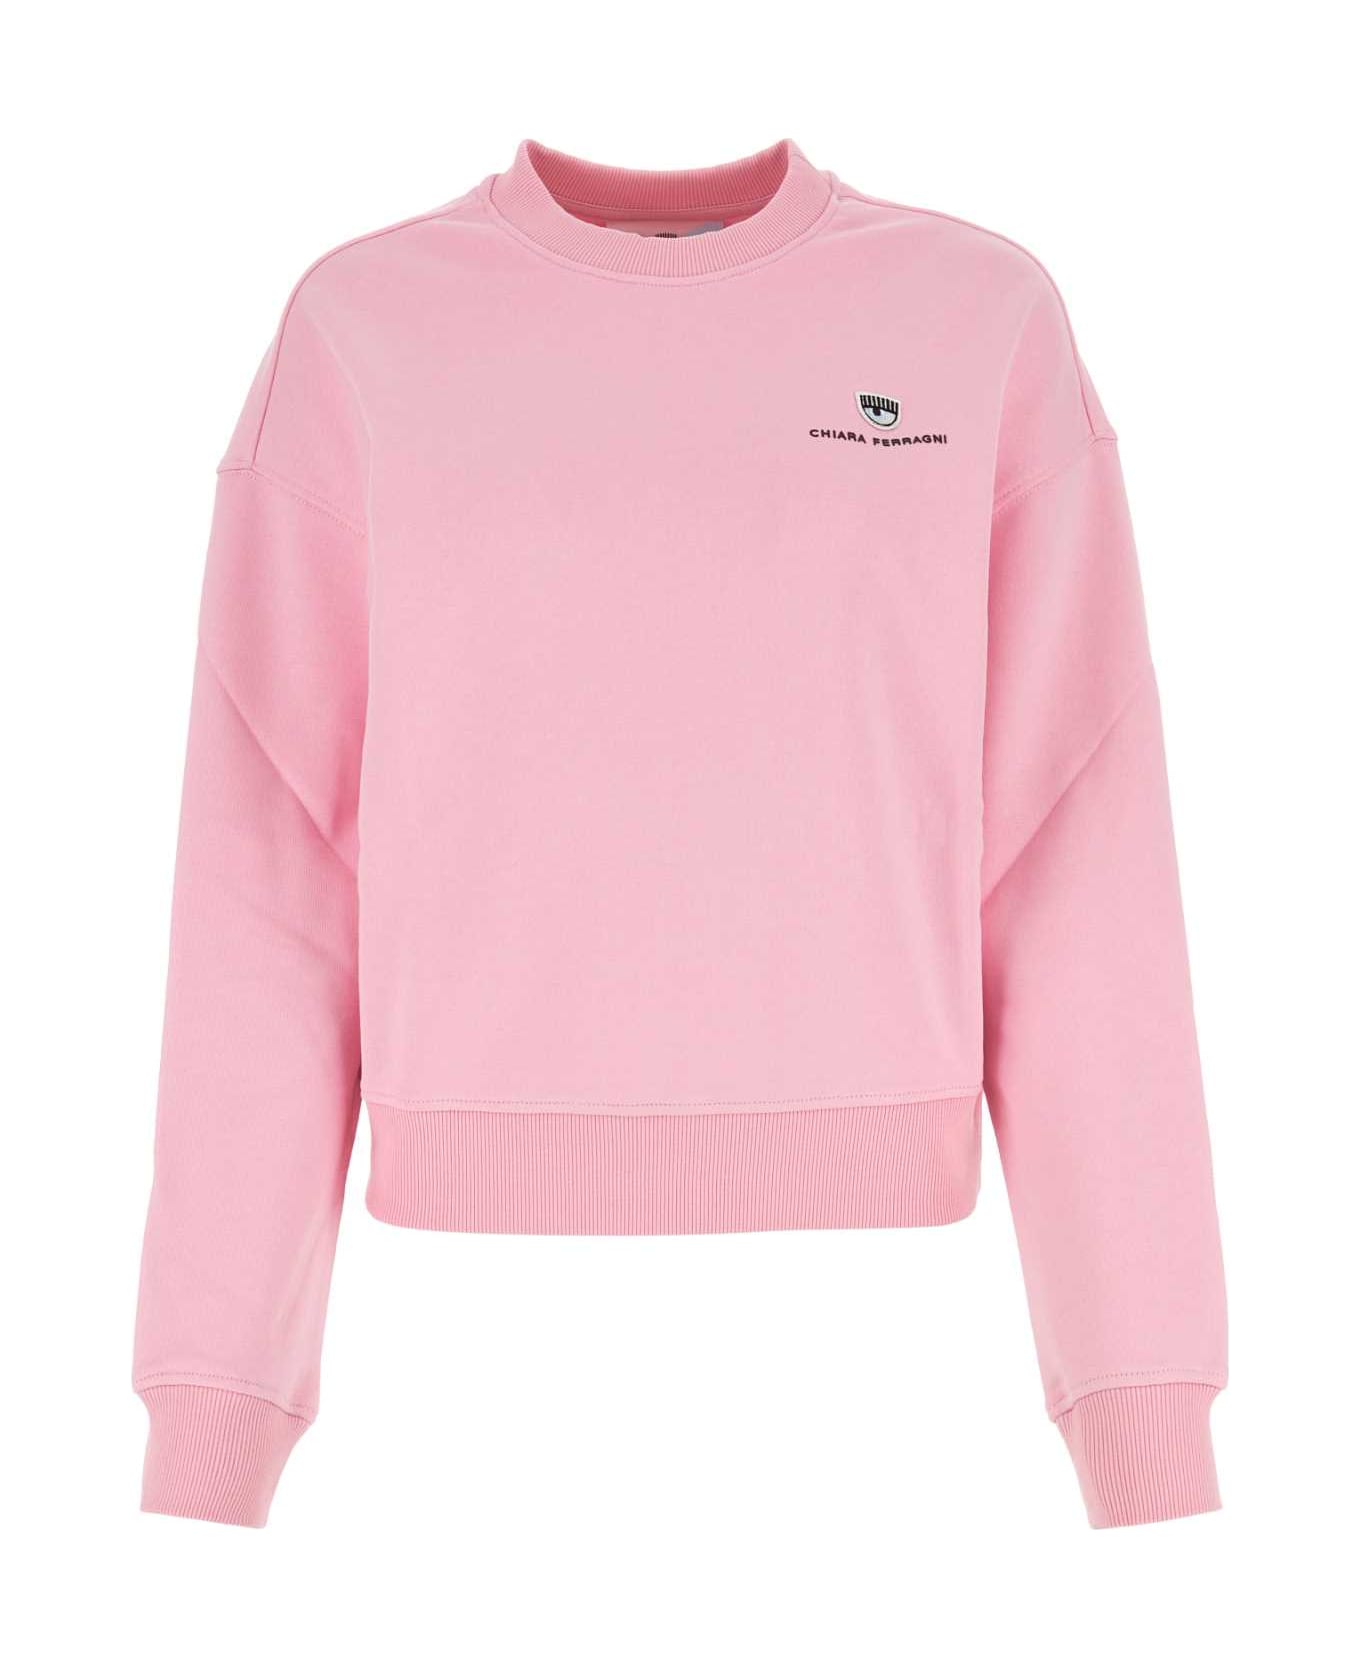 Chiara Ferragni Pink Cotton Sweatshirt - LILIACSACHET